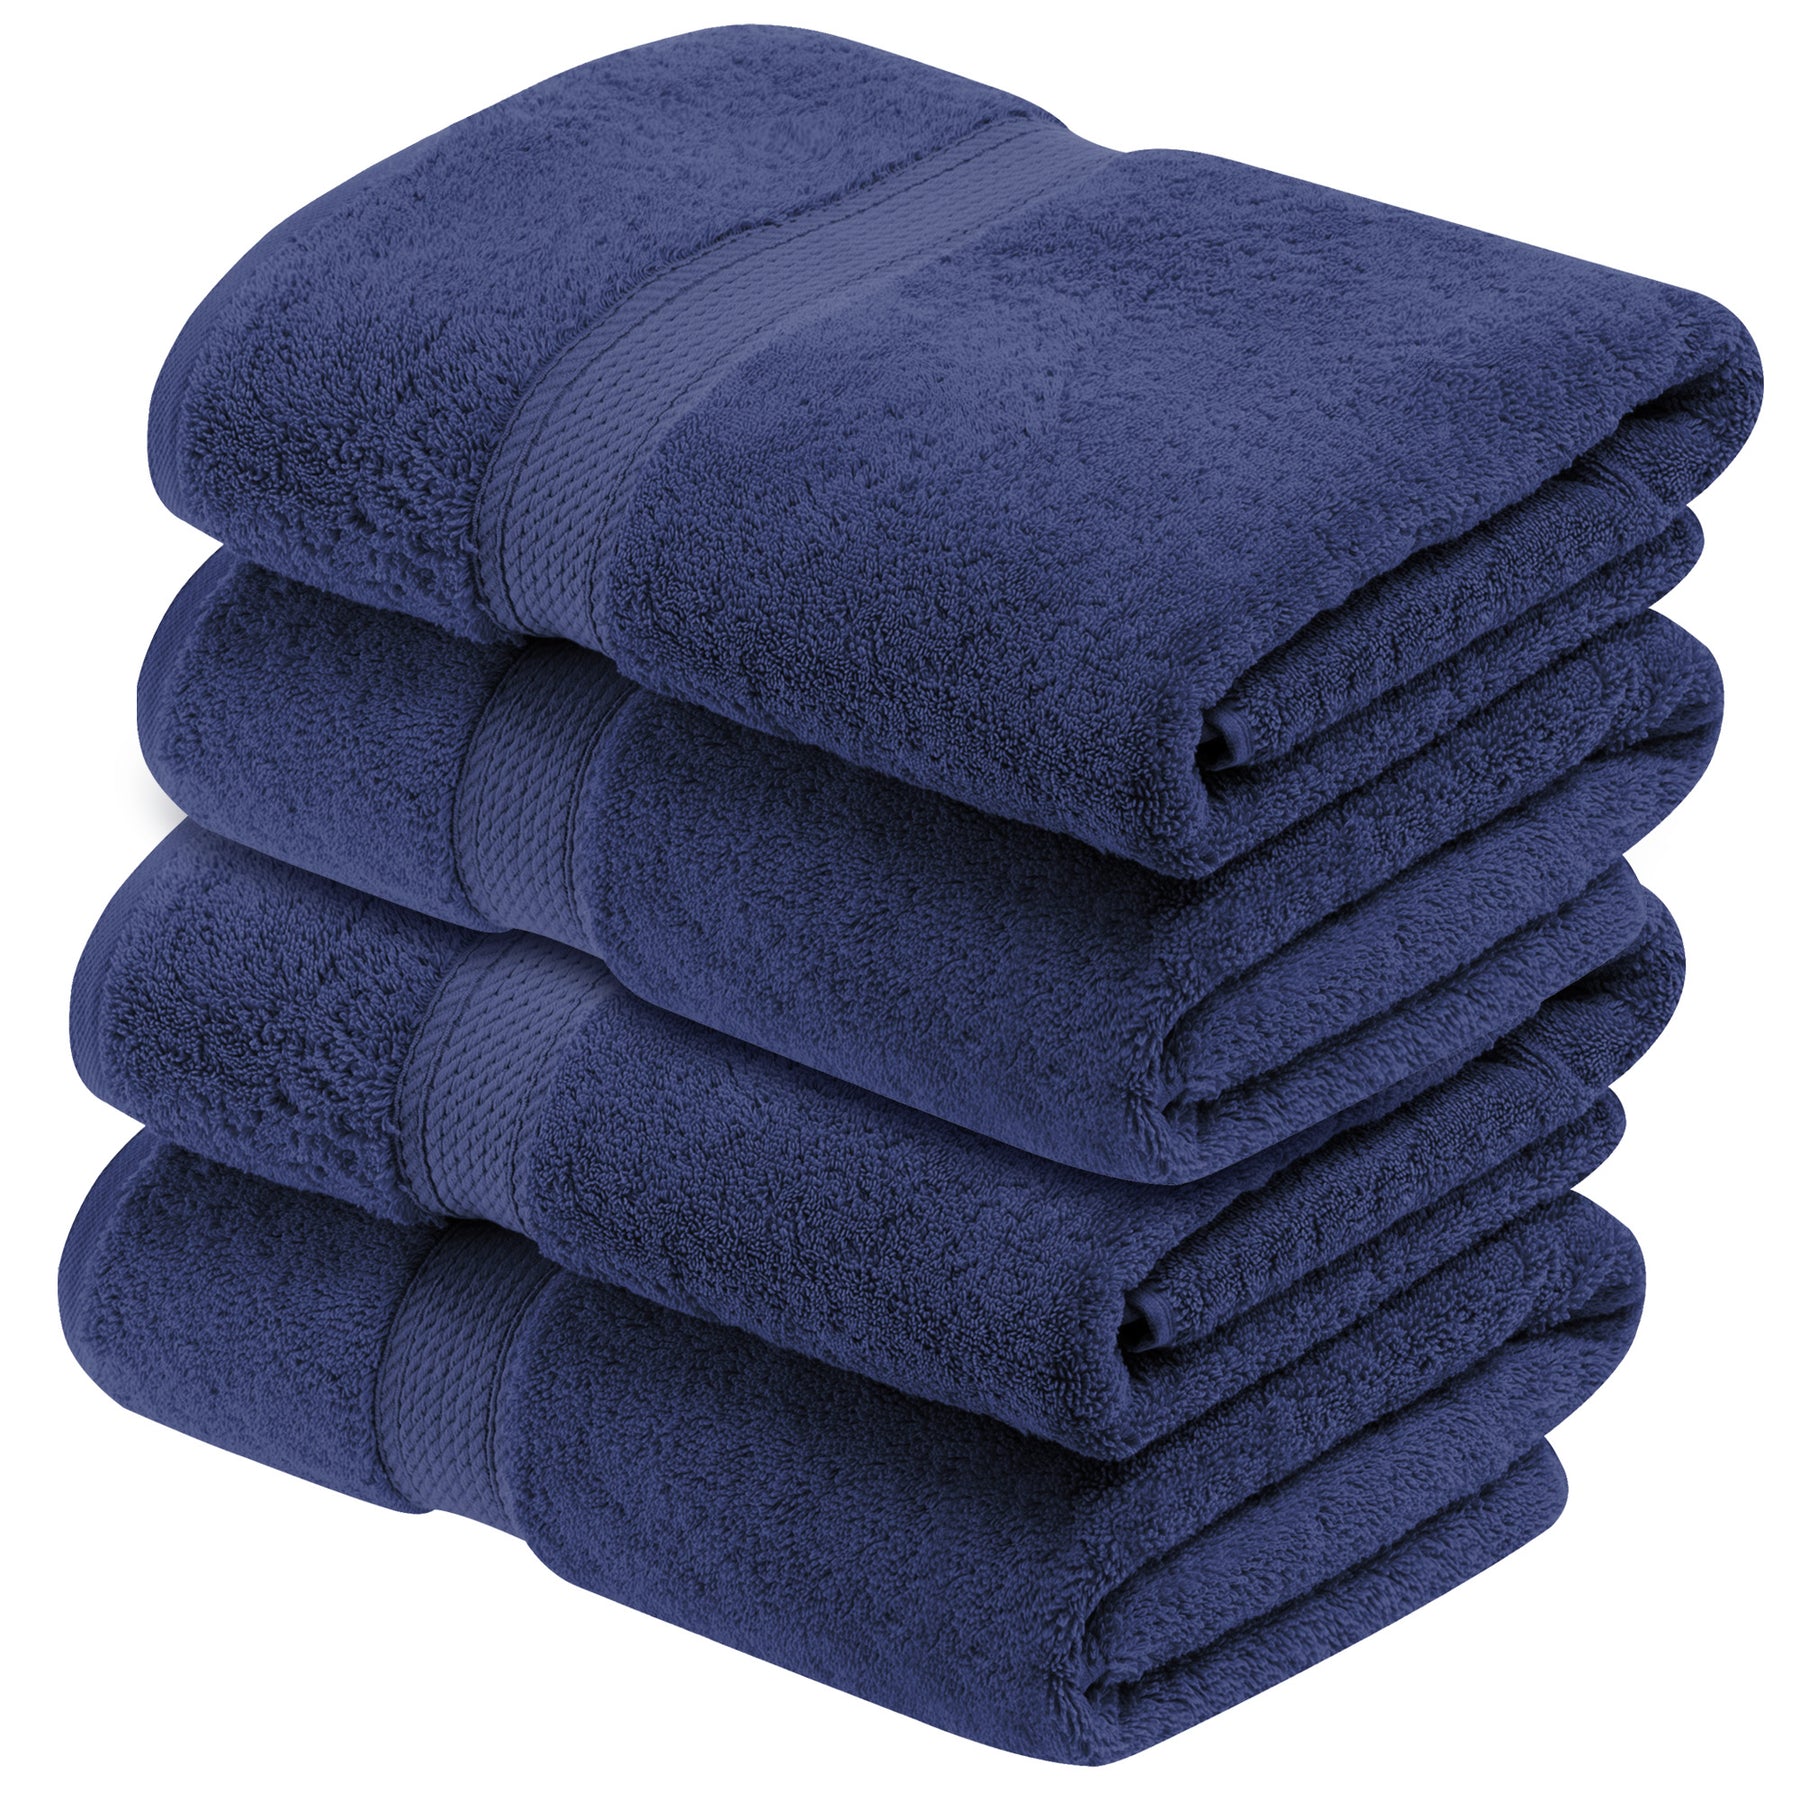 Superior Egyptian Cotton Plush Heavyweight Absorbent Luxury Soft Bath Towel  - Navy Blue